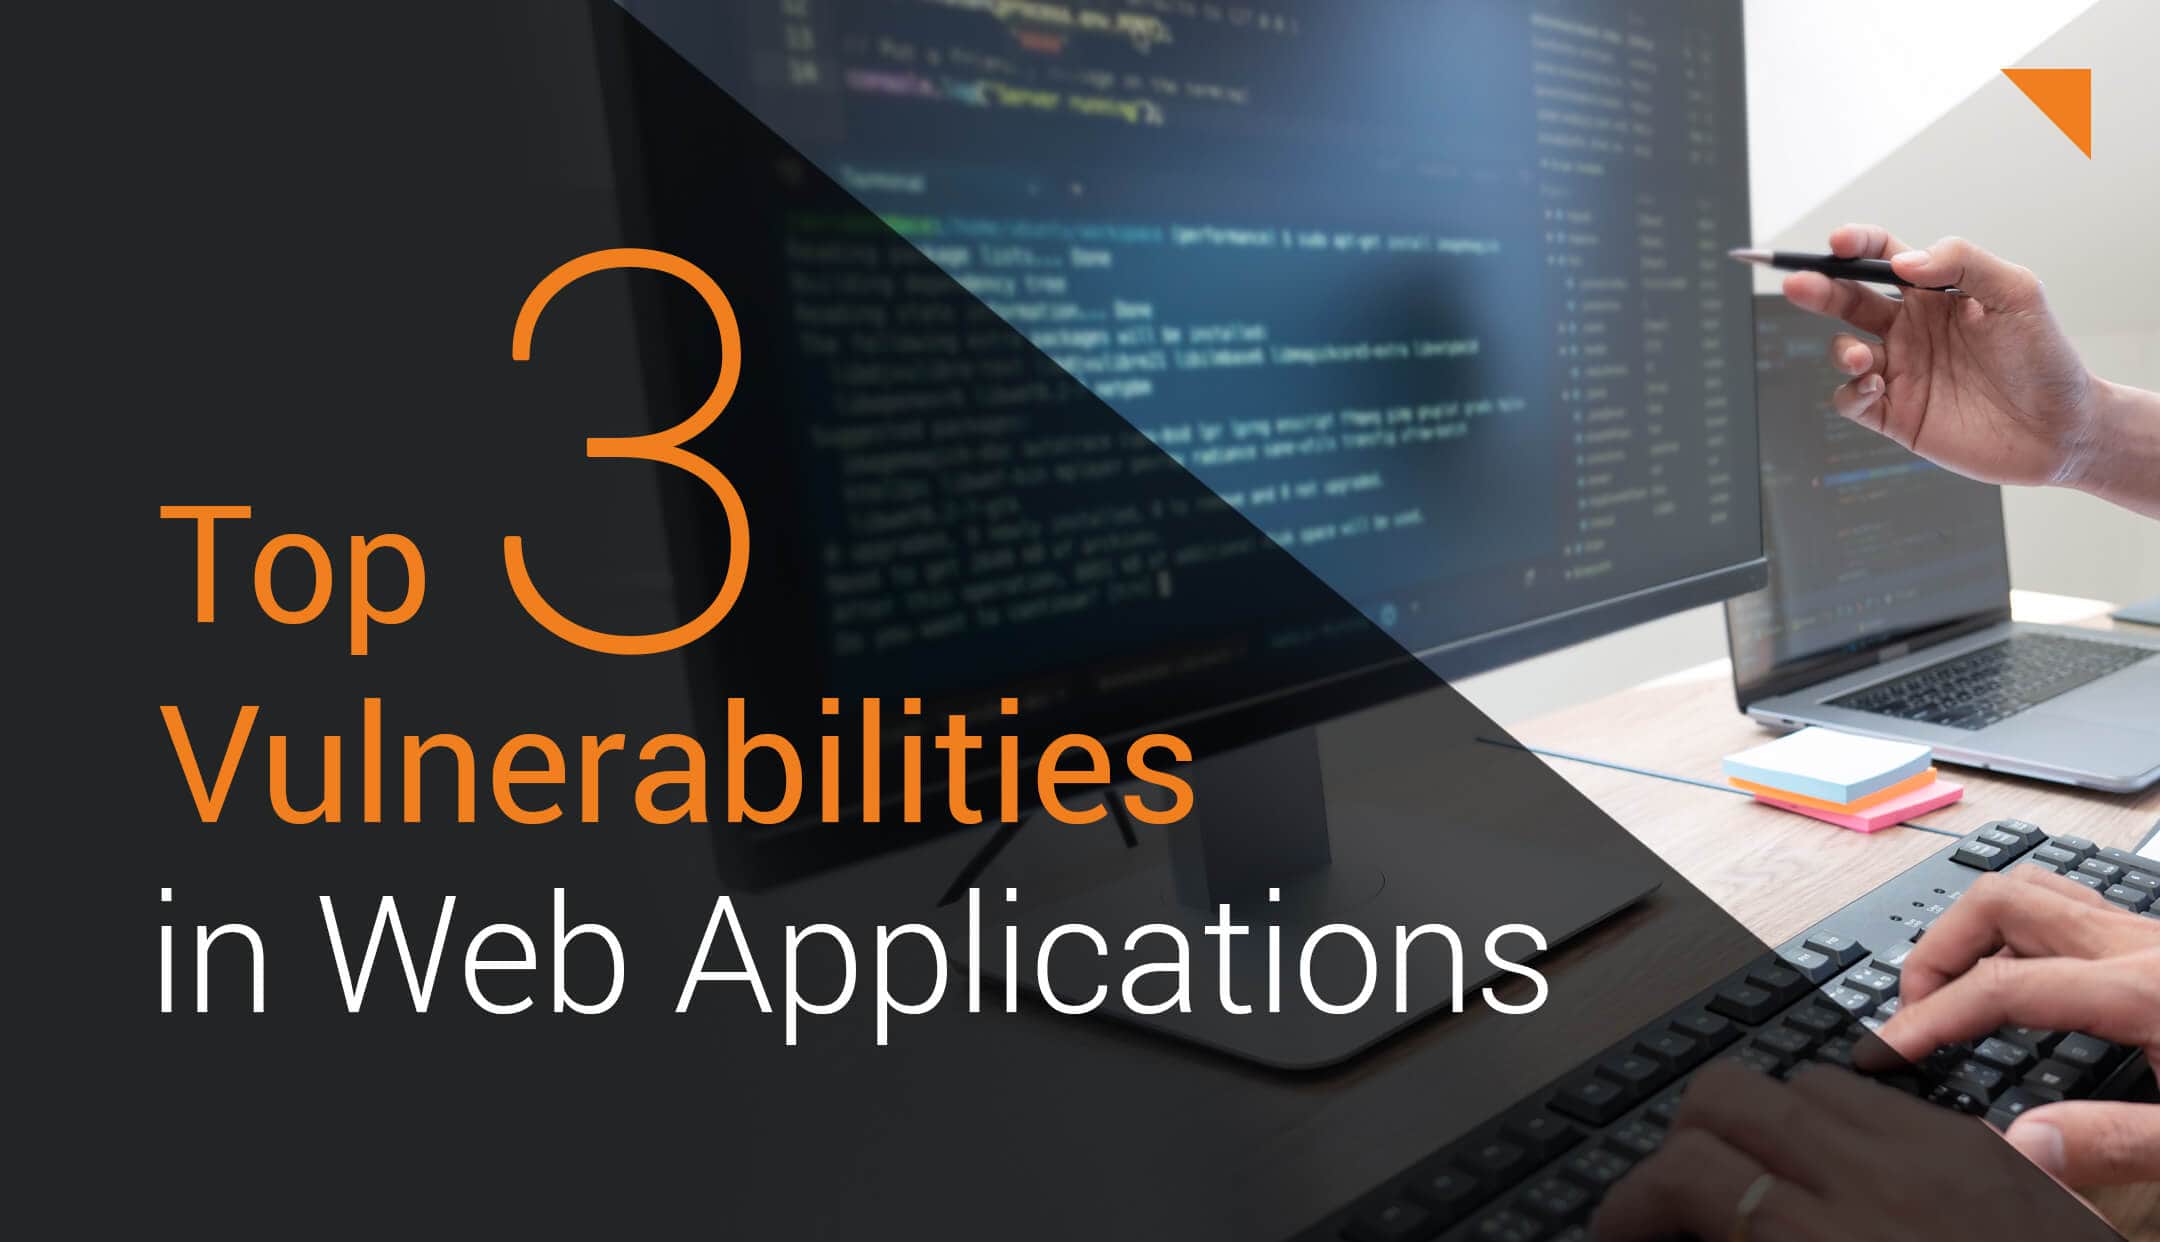 Top 3 Vulnerabilities in Web Applications